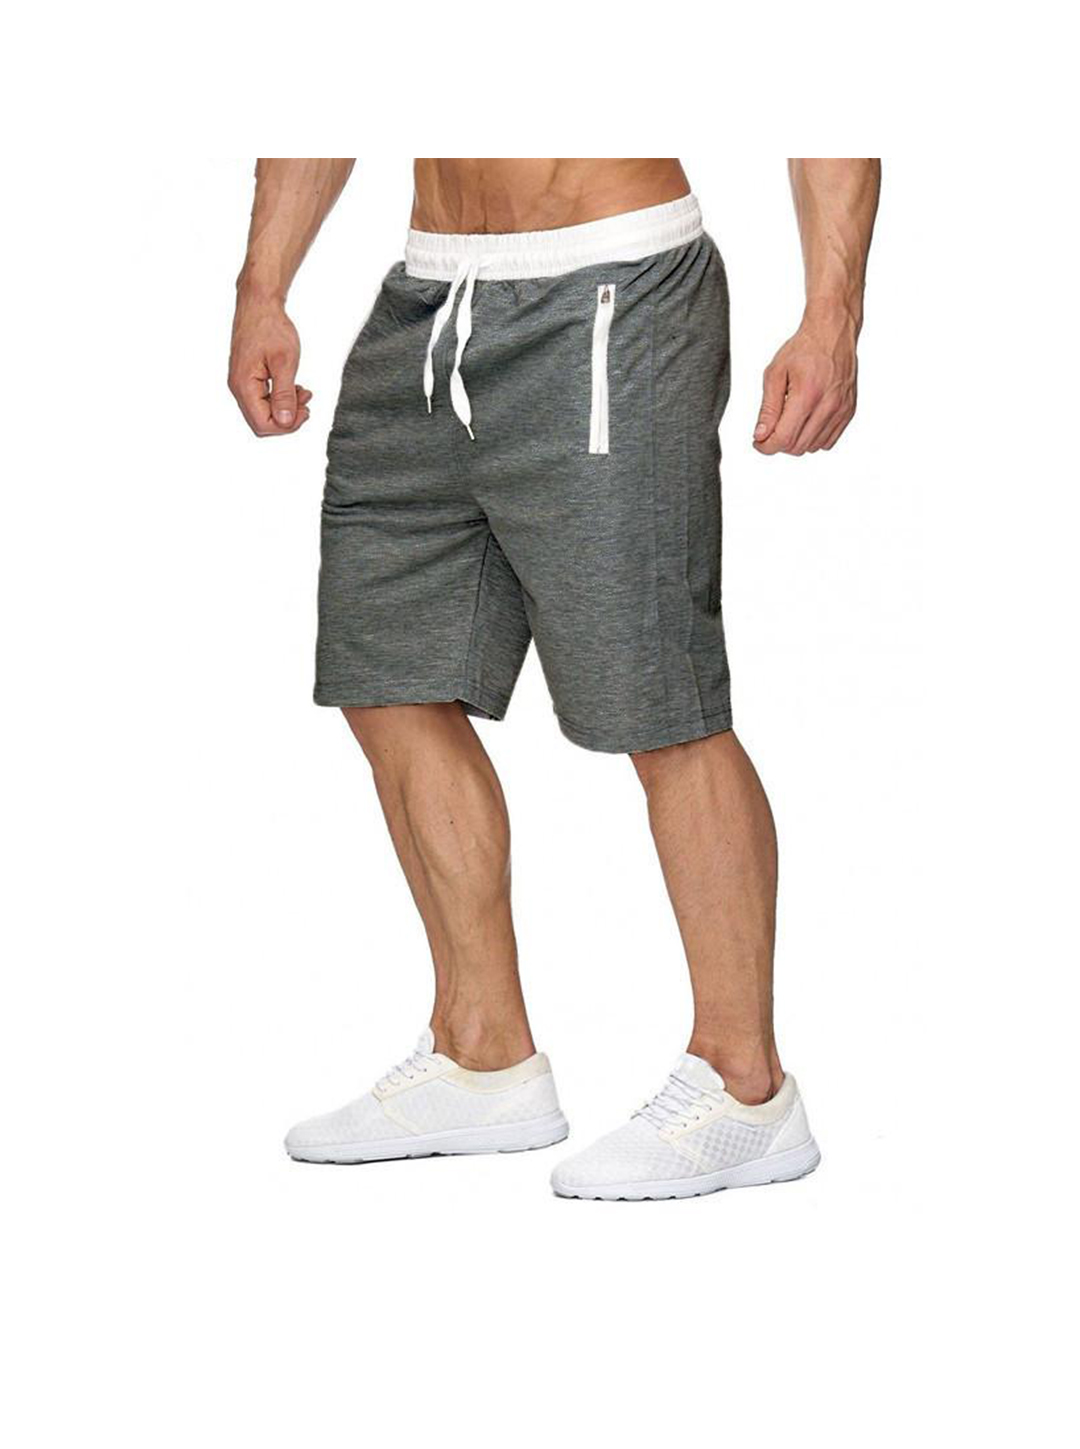 Poisonstreetwear Men's Contrast Color Sports Shorts-poisonstreetwear.com